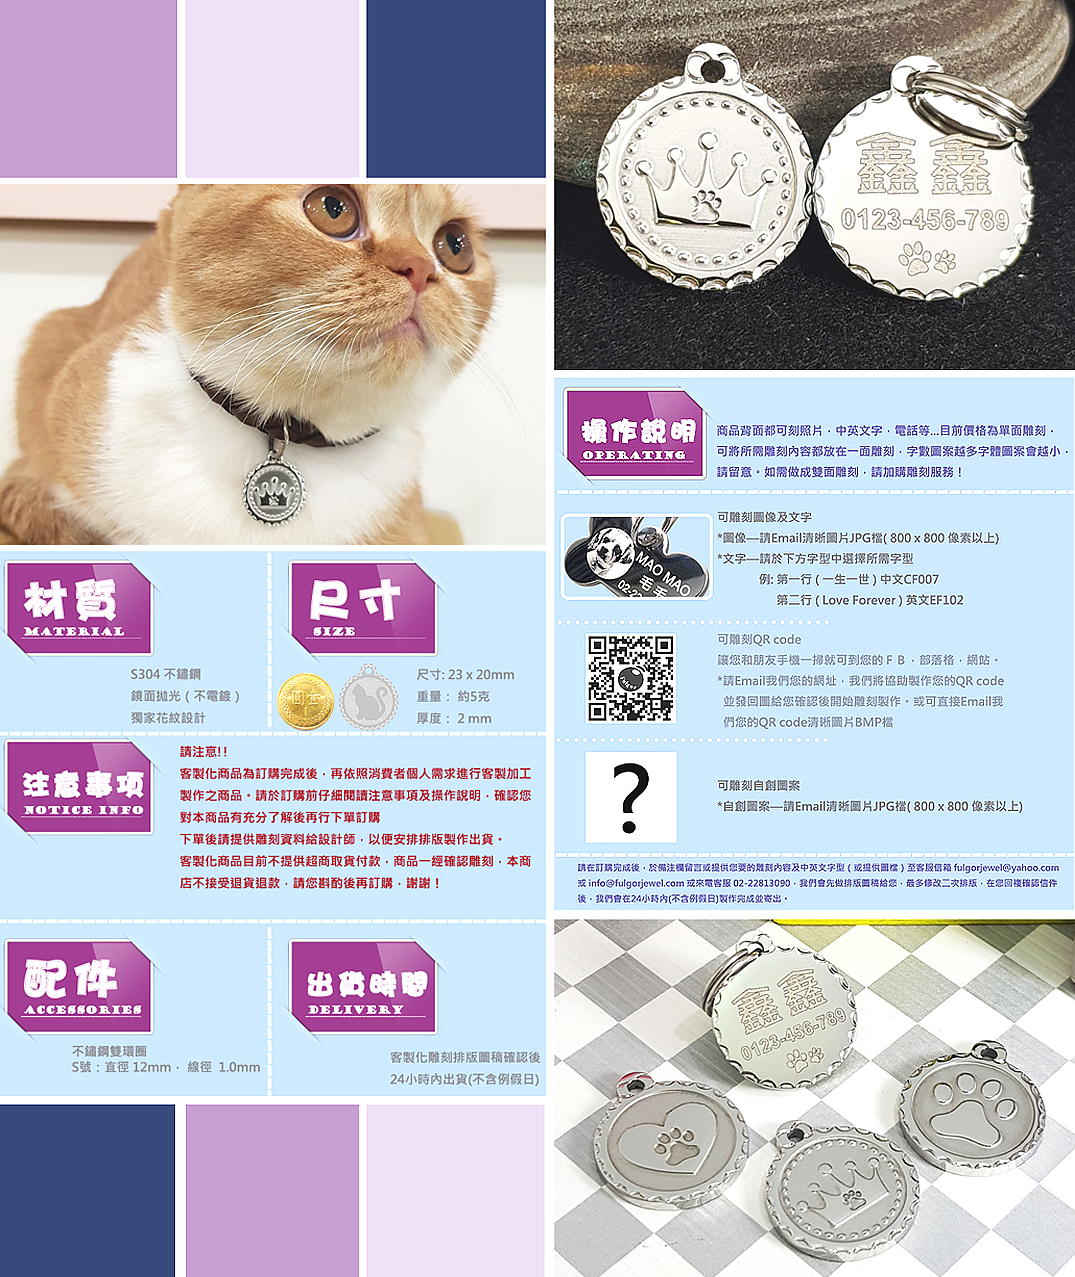 客製貓咪姓名牌吊牌皇冠腳掌貓牌-富狗客製-Steel-Engraving-Crown-and-Paw-Design-pet id tag-FulgorJewel-Cat-Tag-info.jpg